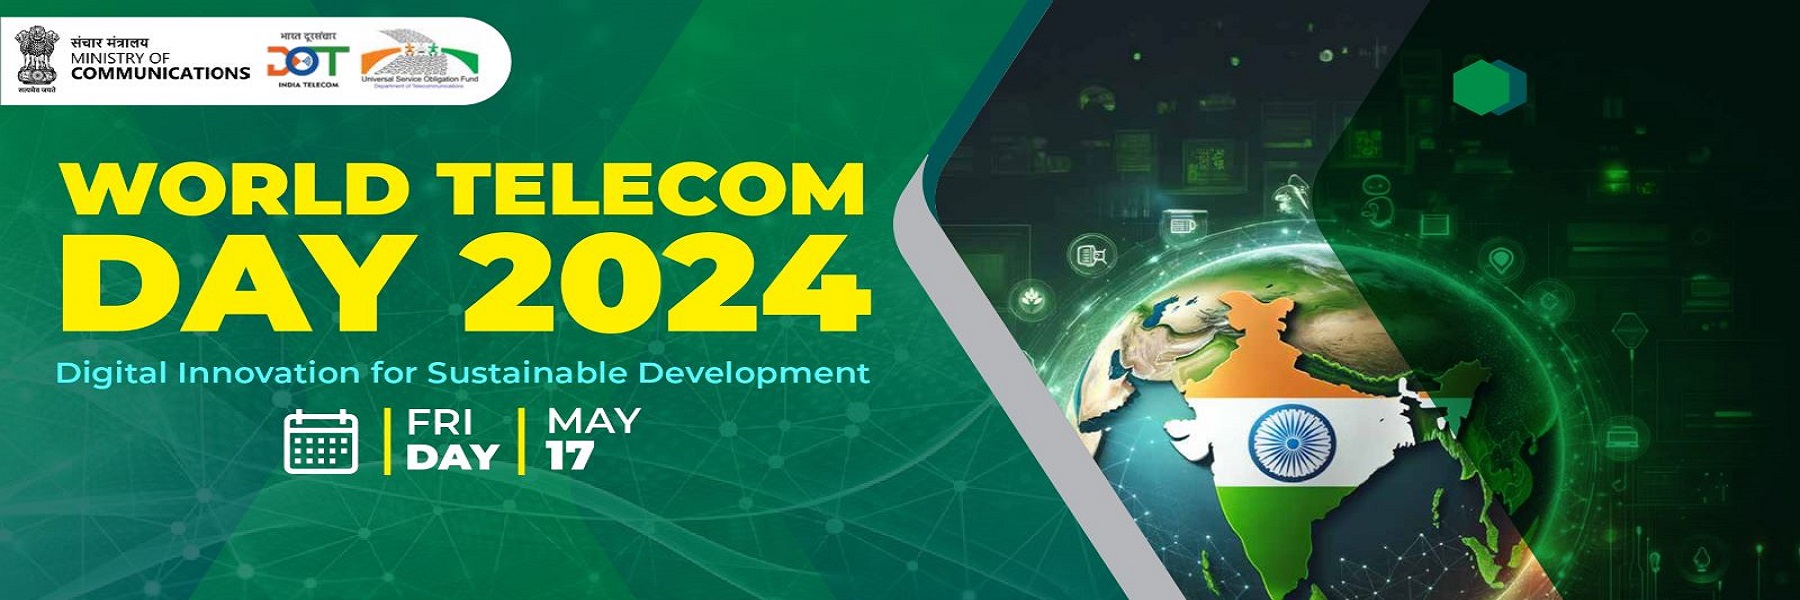 World Telecom Day 2024